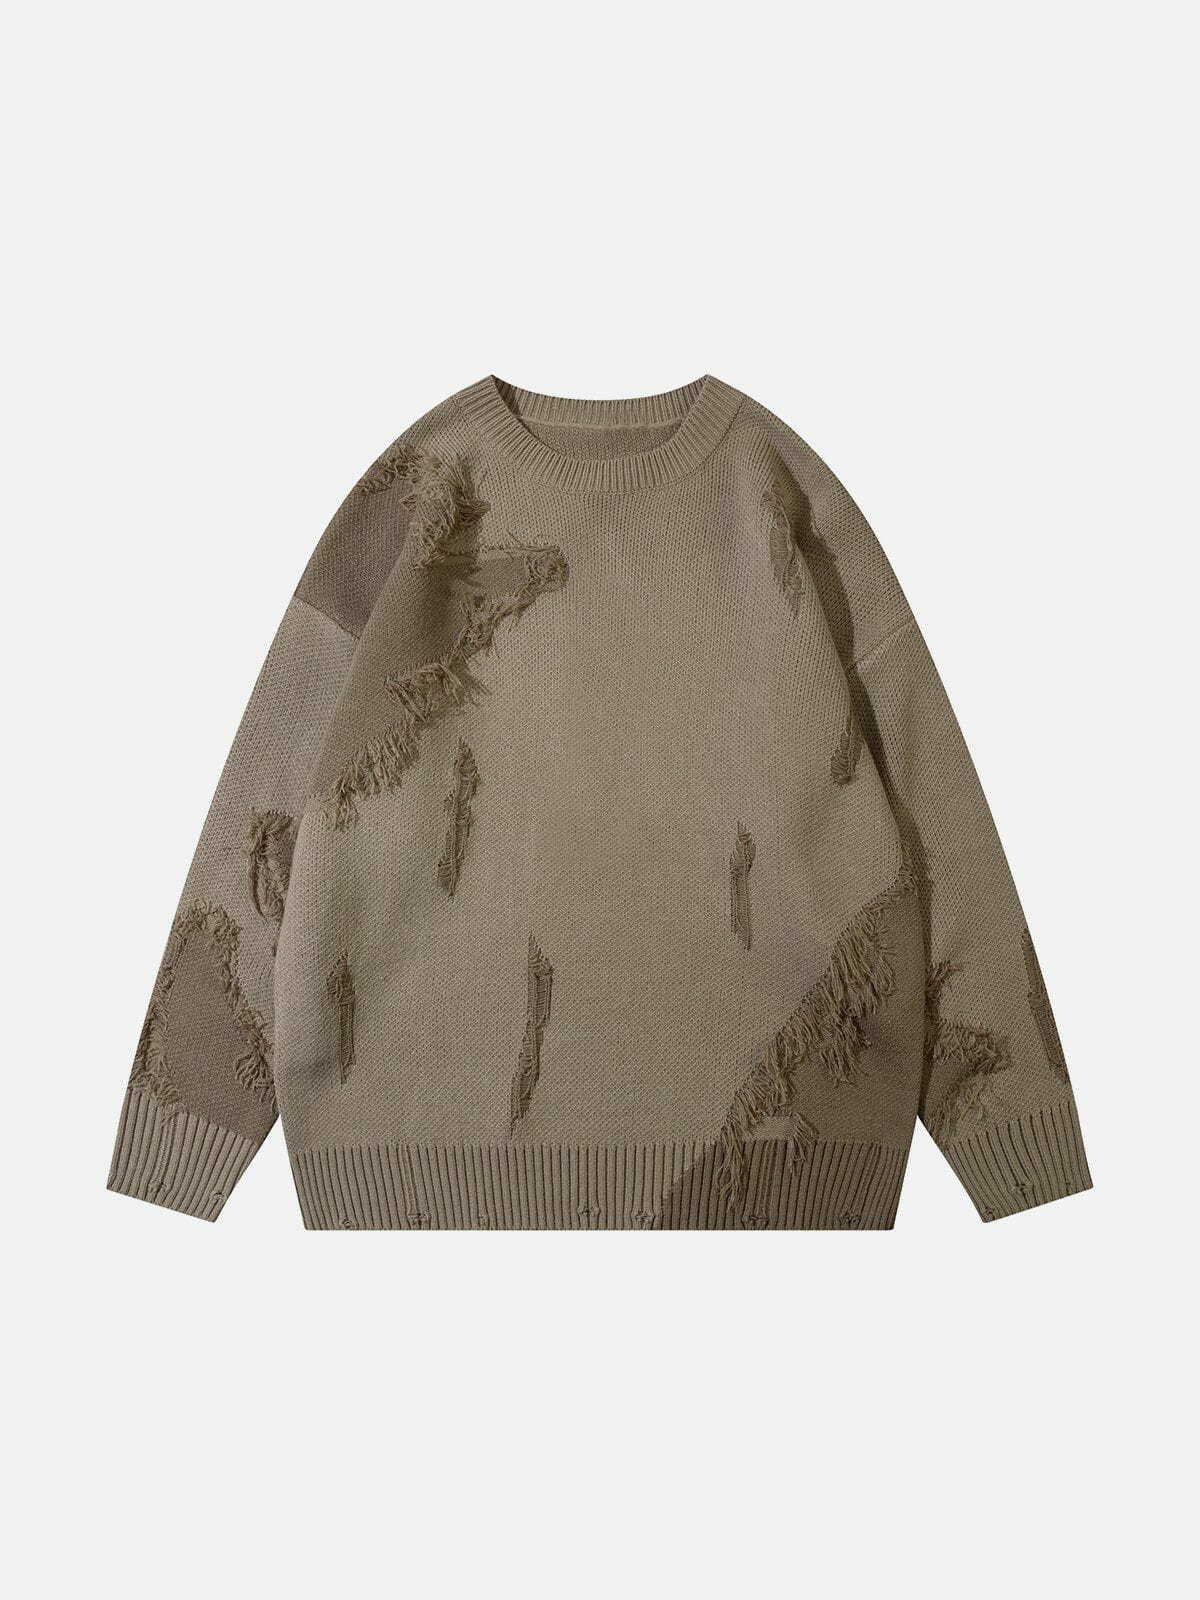 jacquard stitched pullover sleek urban edge 2427